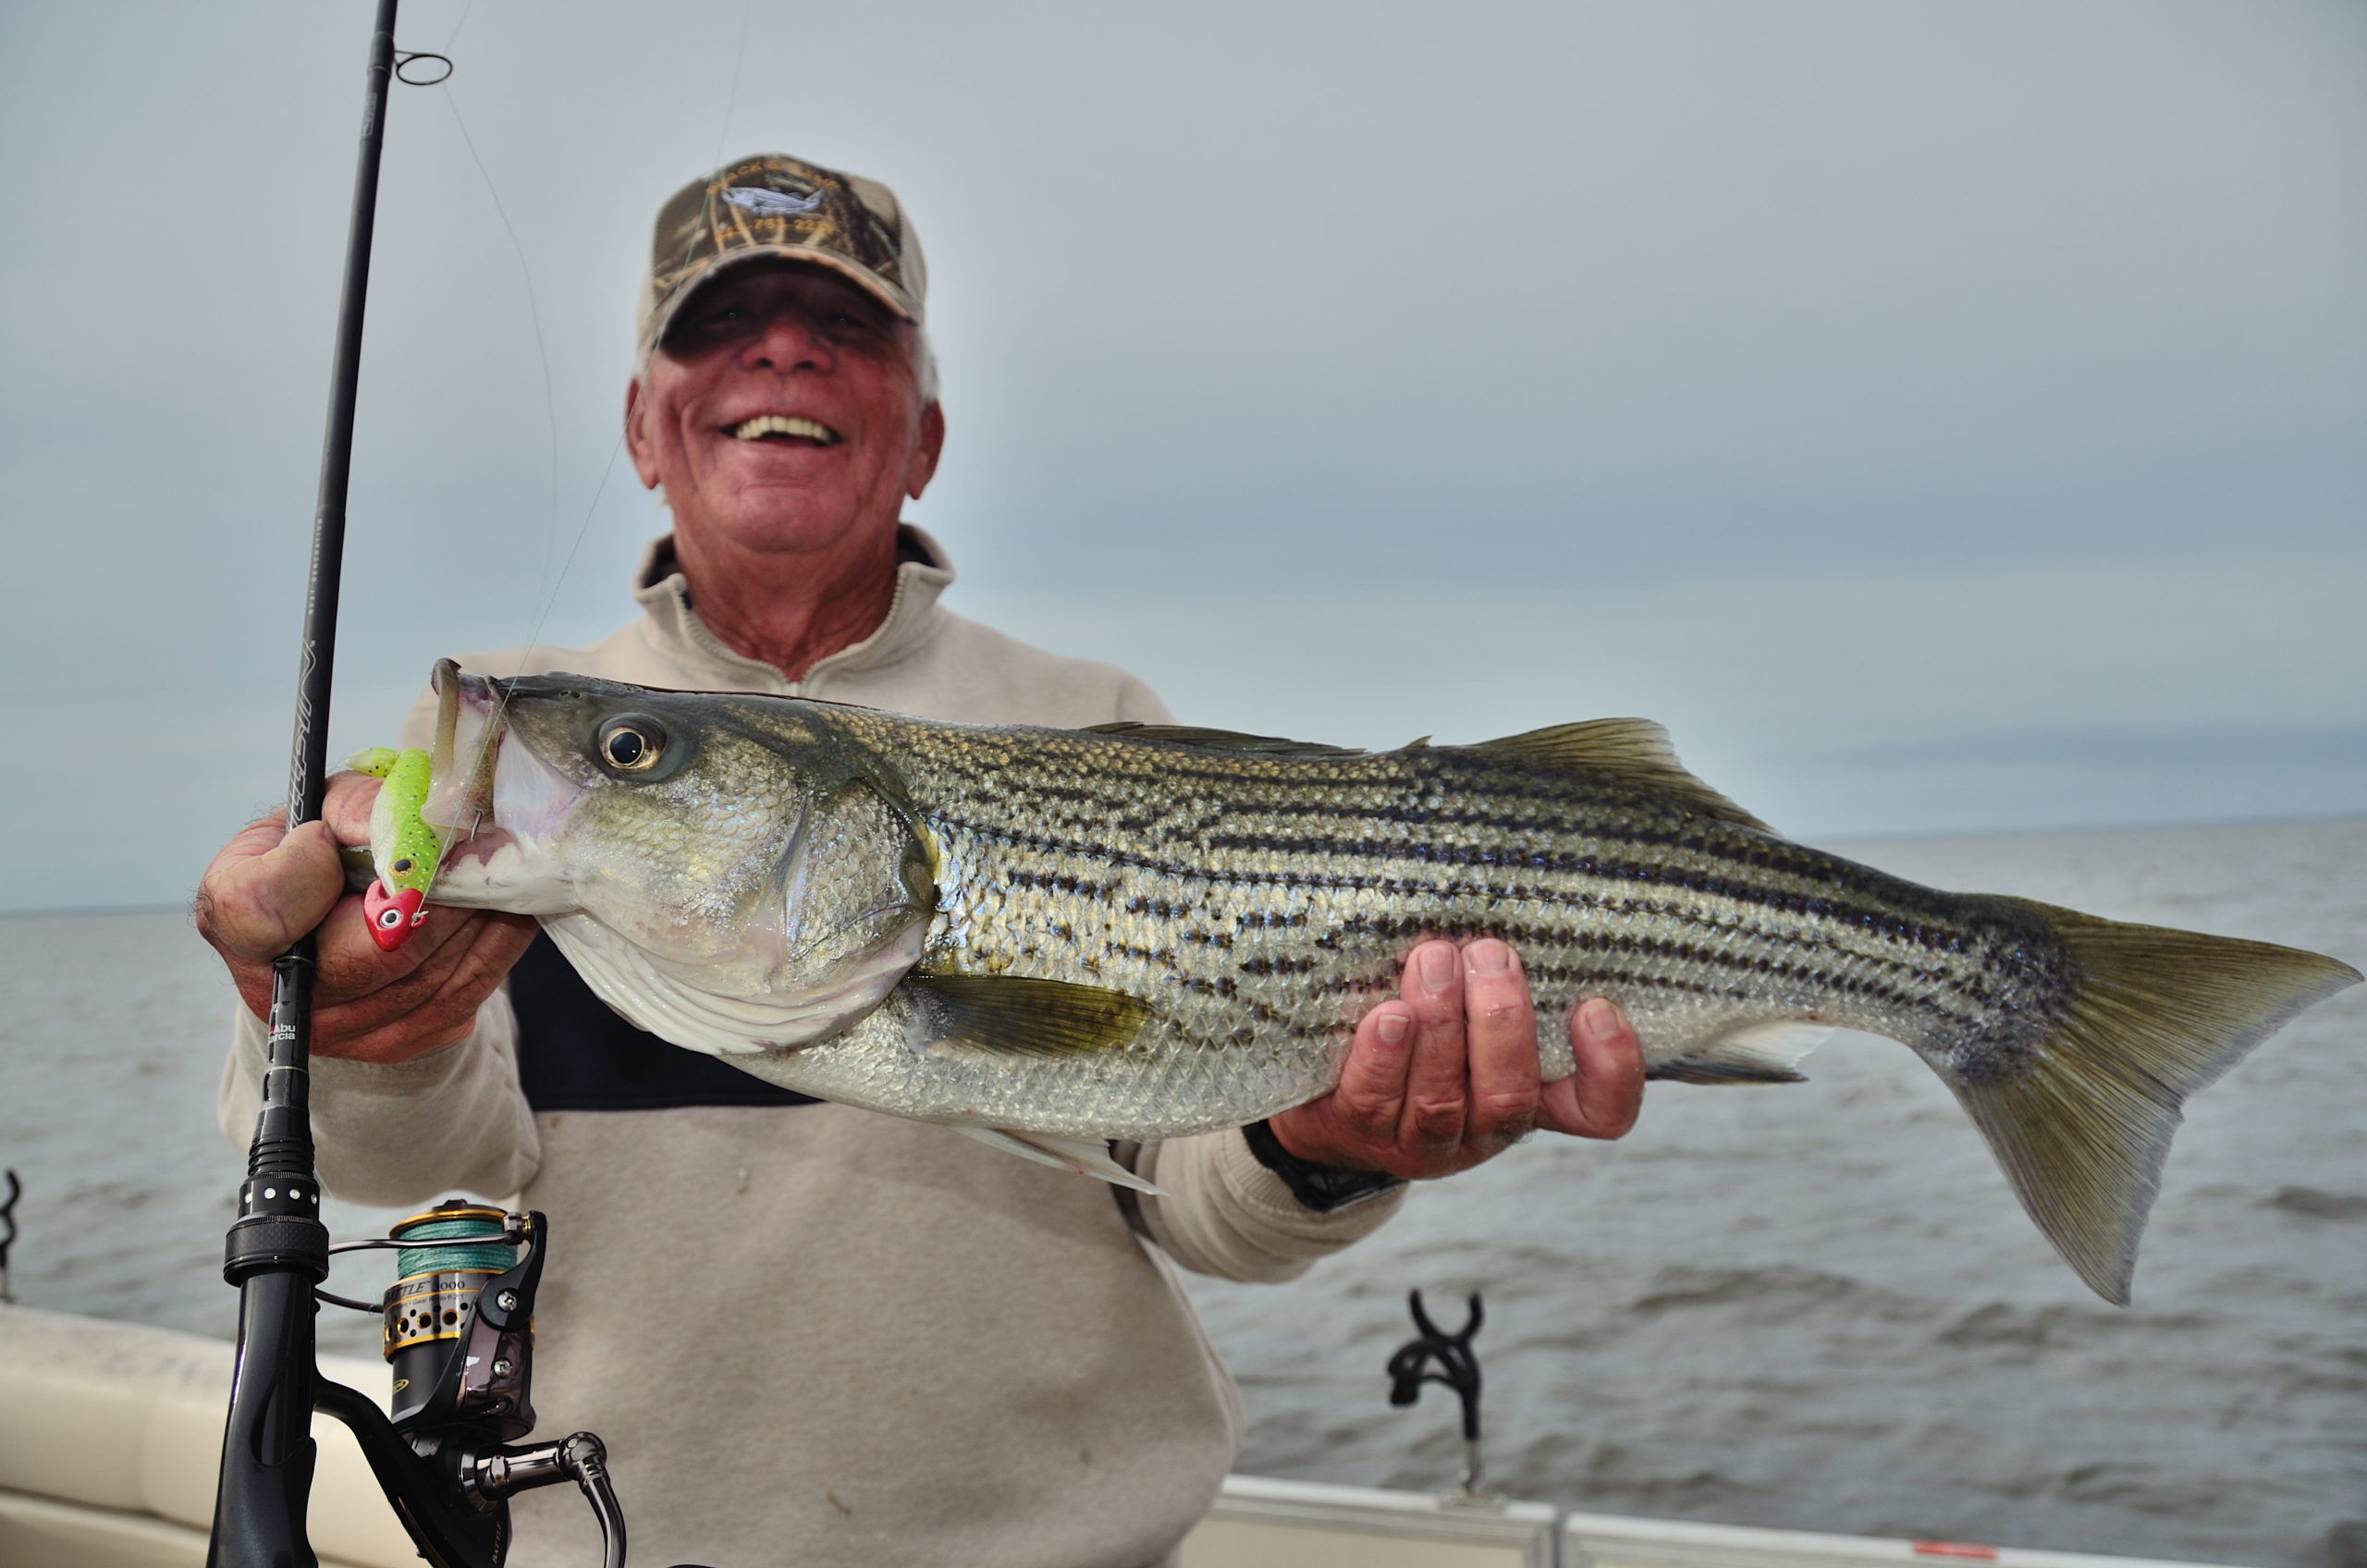 Fall striped bass fishing frenzy